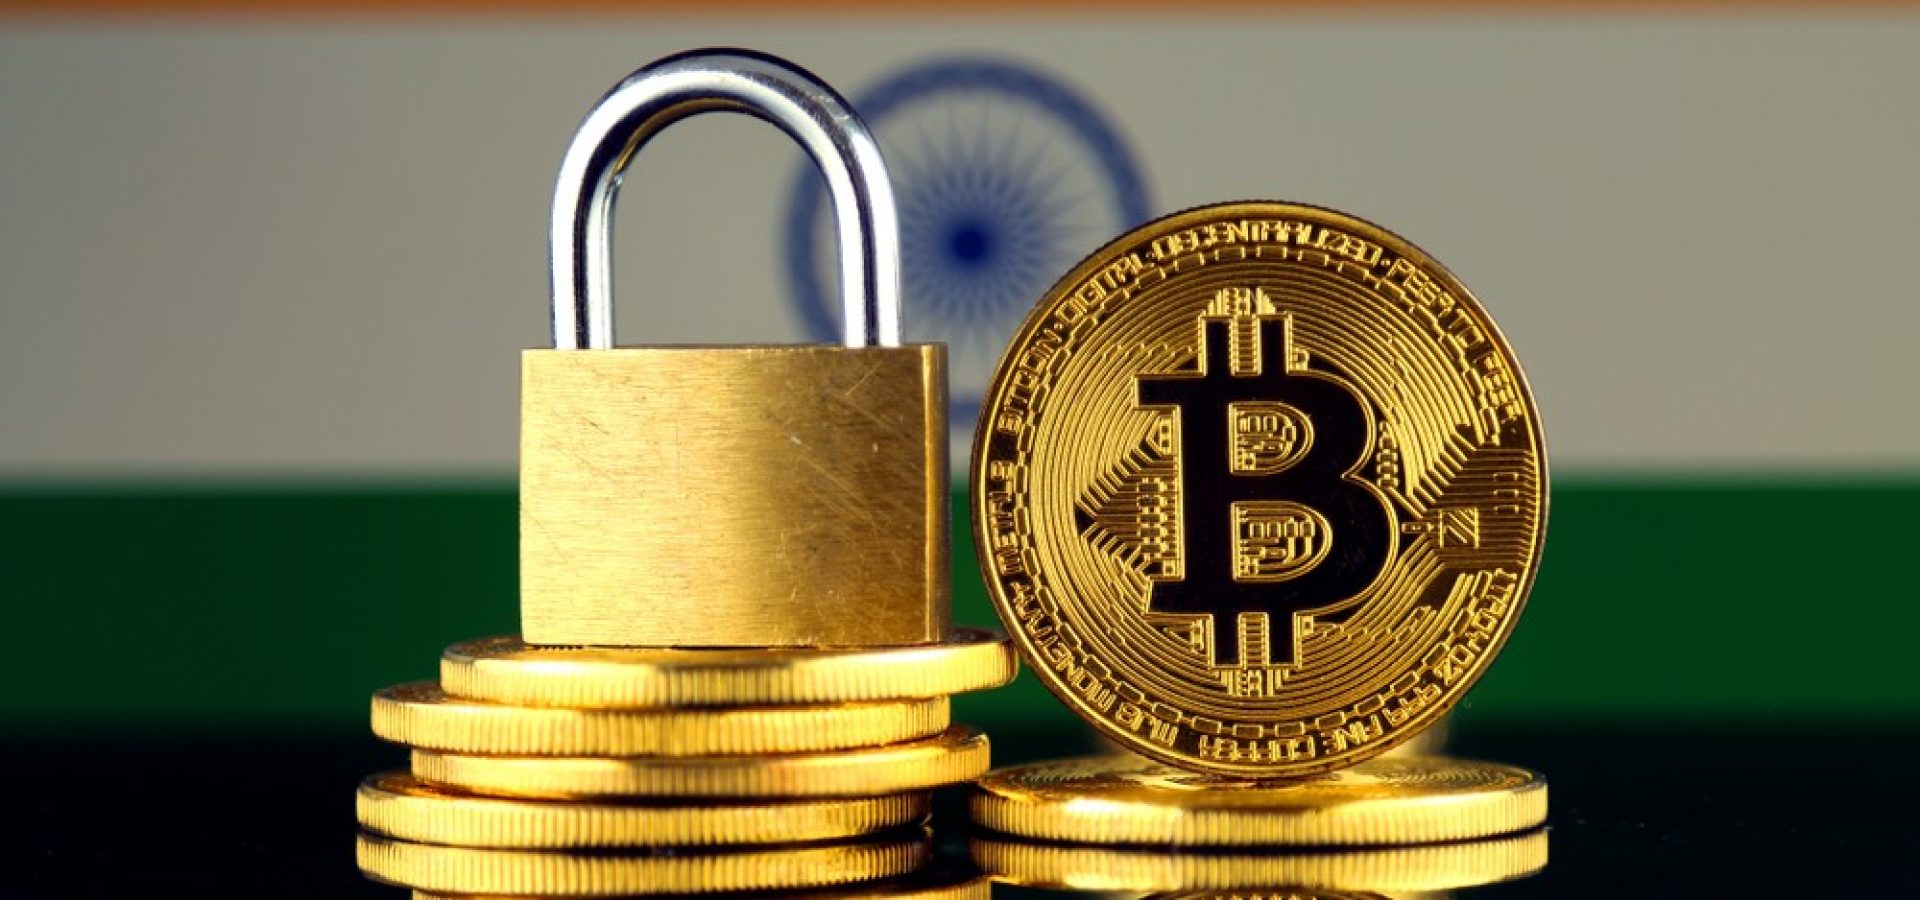 India might ban crypto transactions